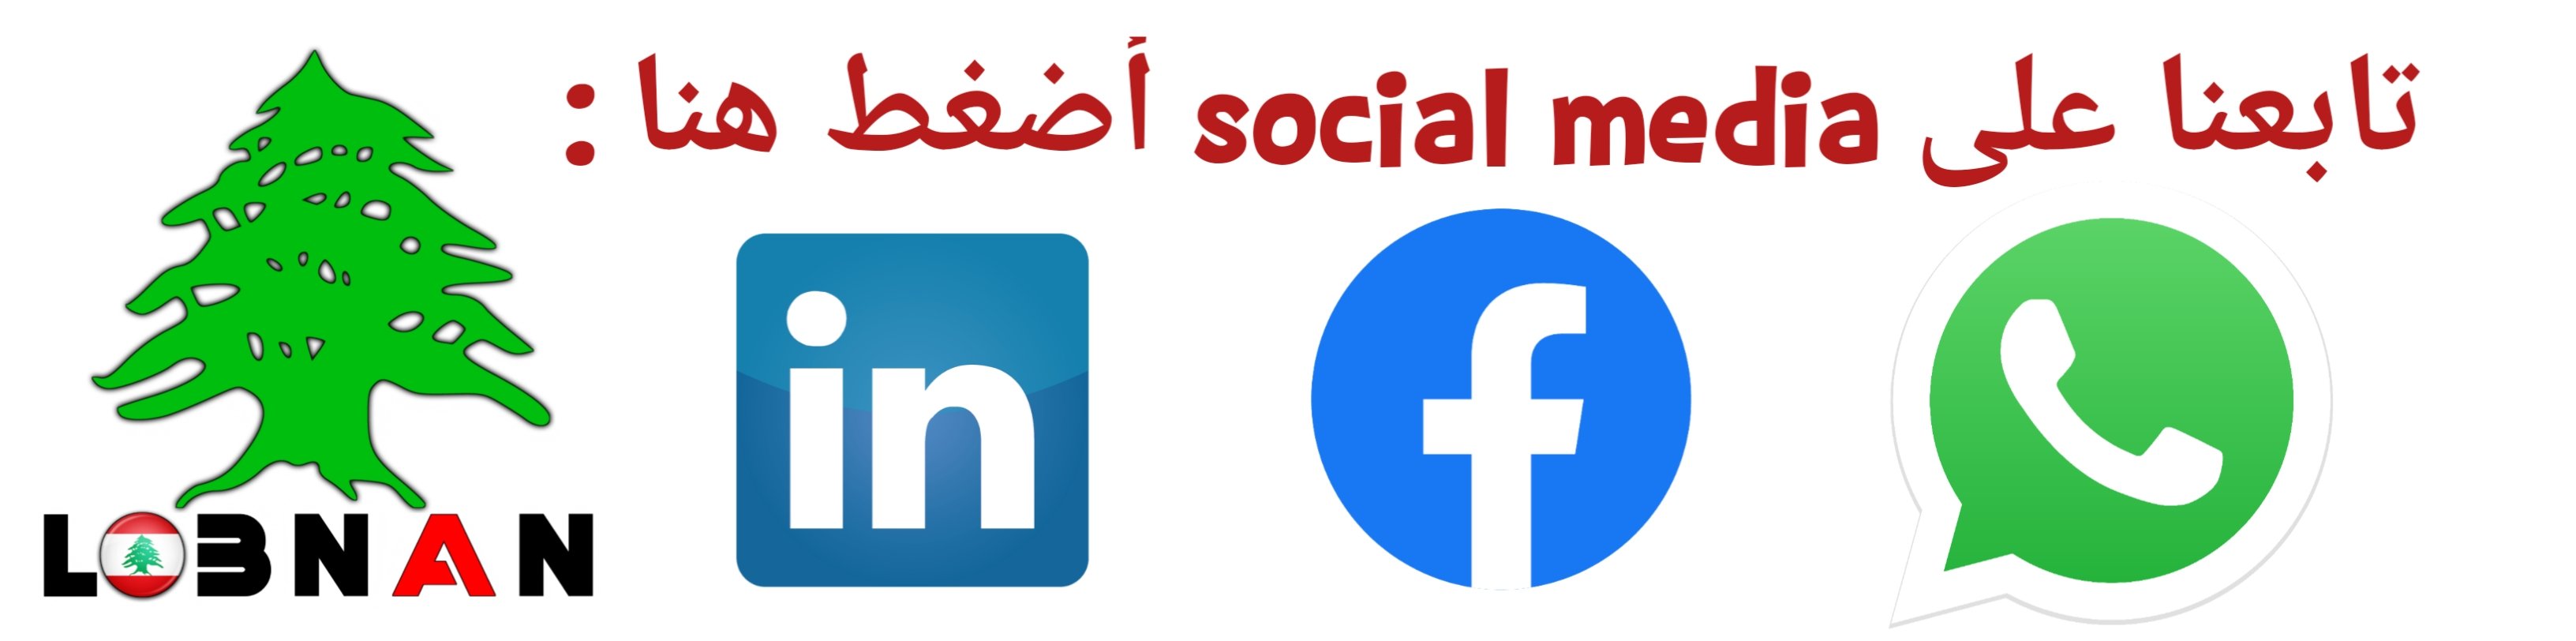 Social media khoddam El rab